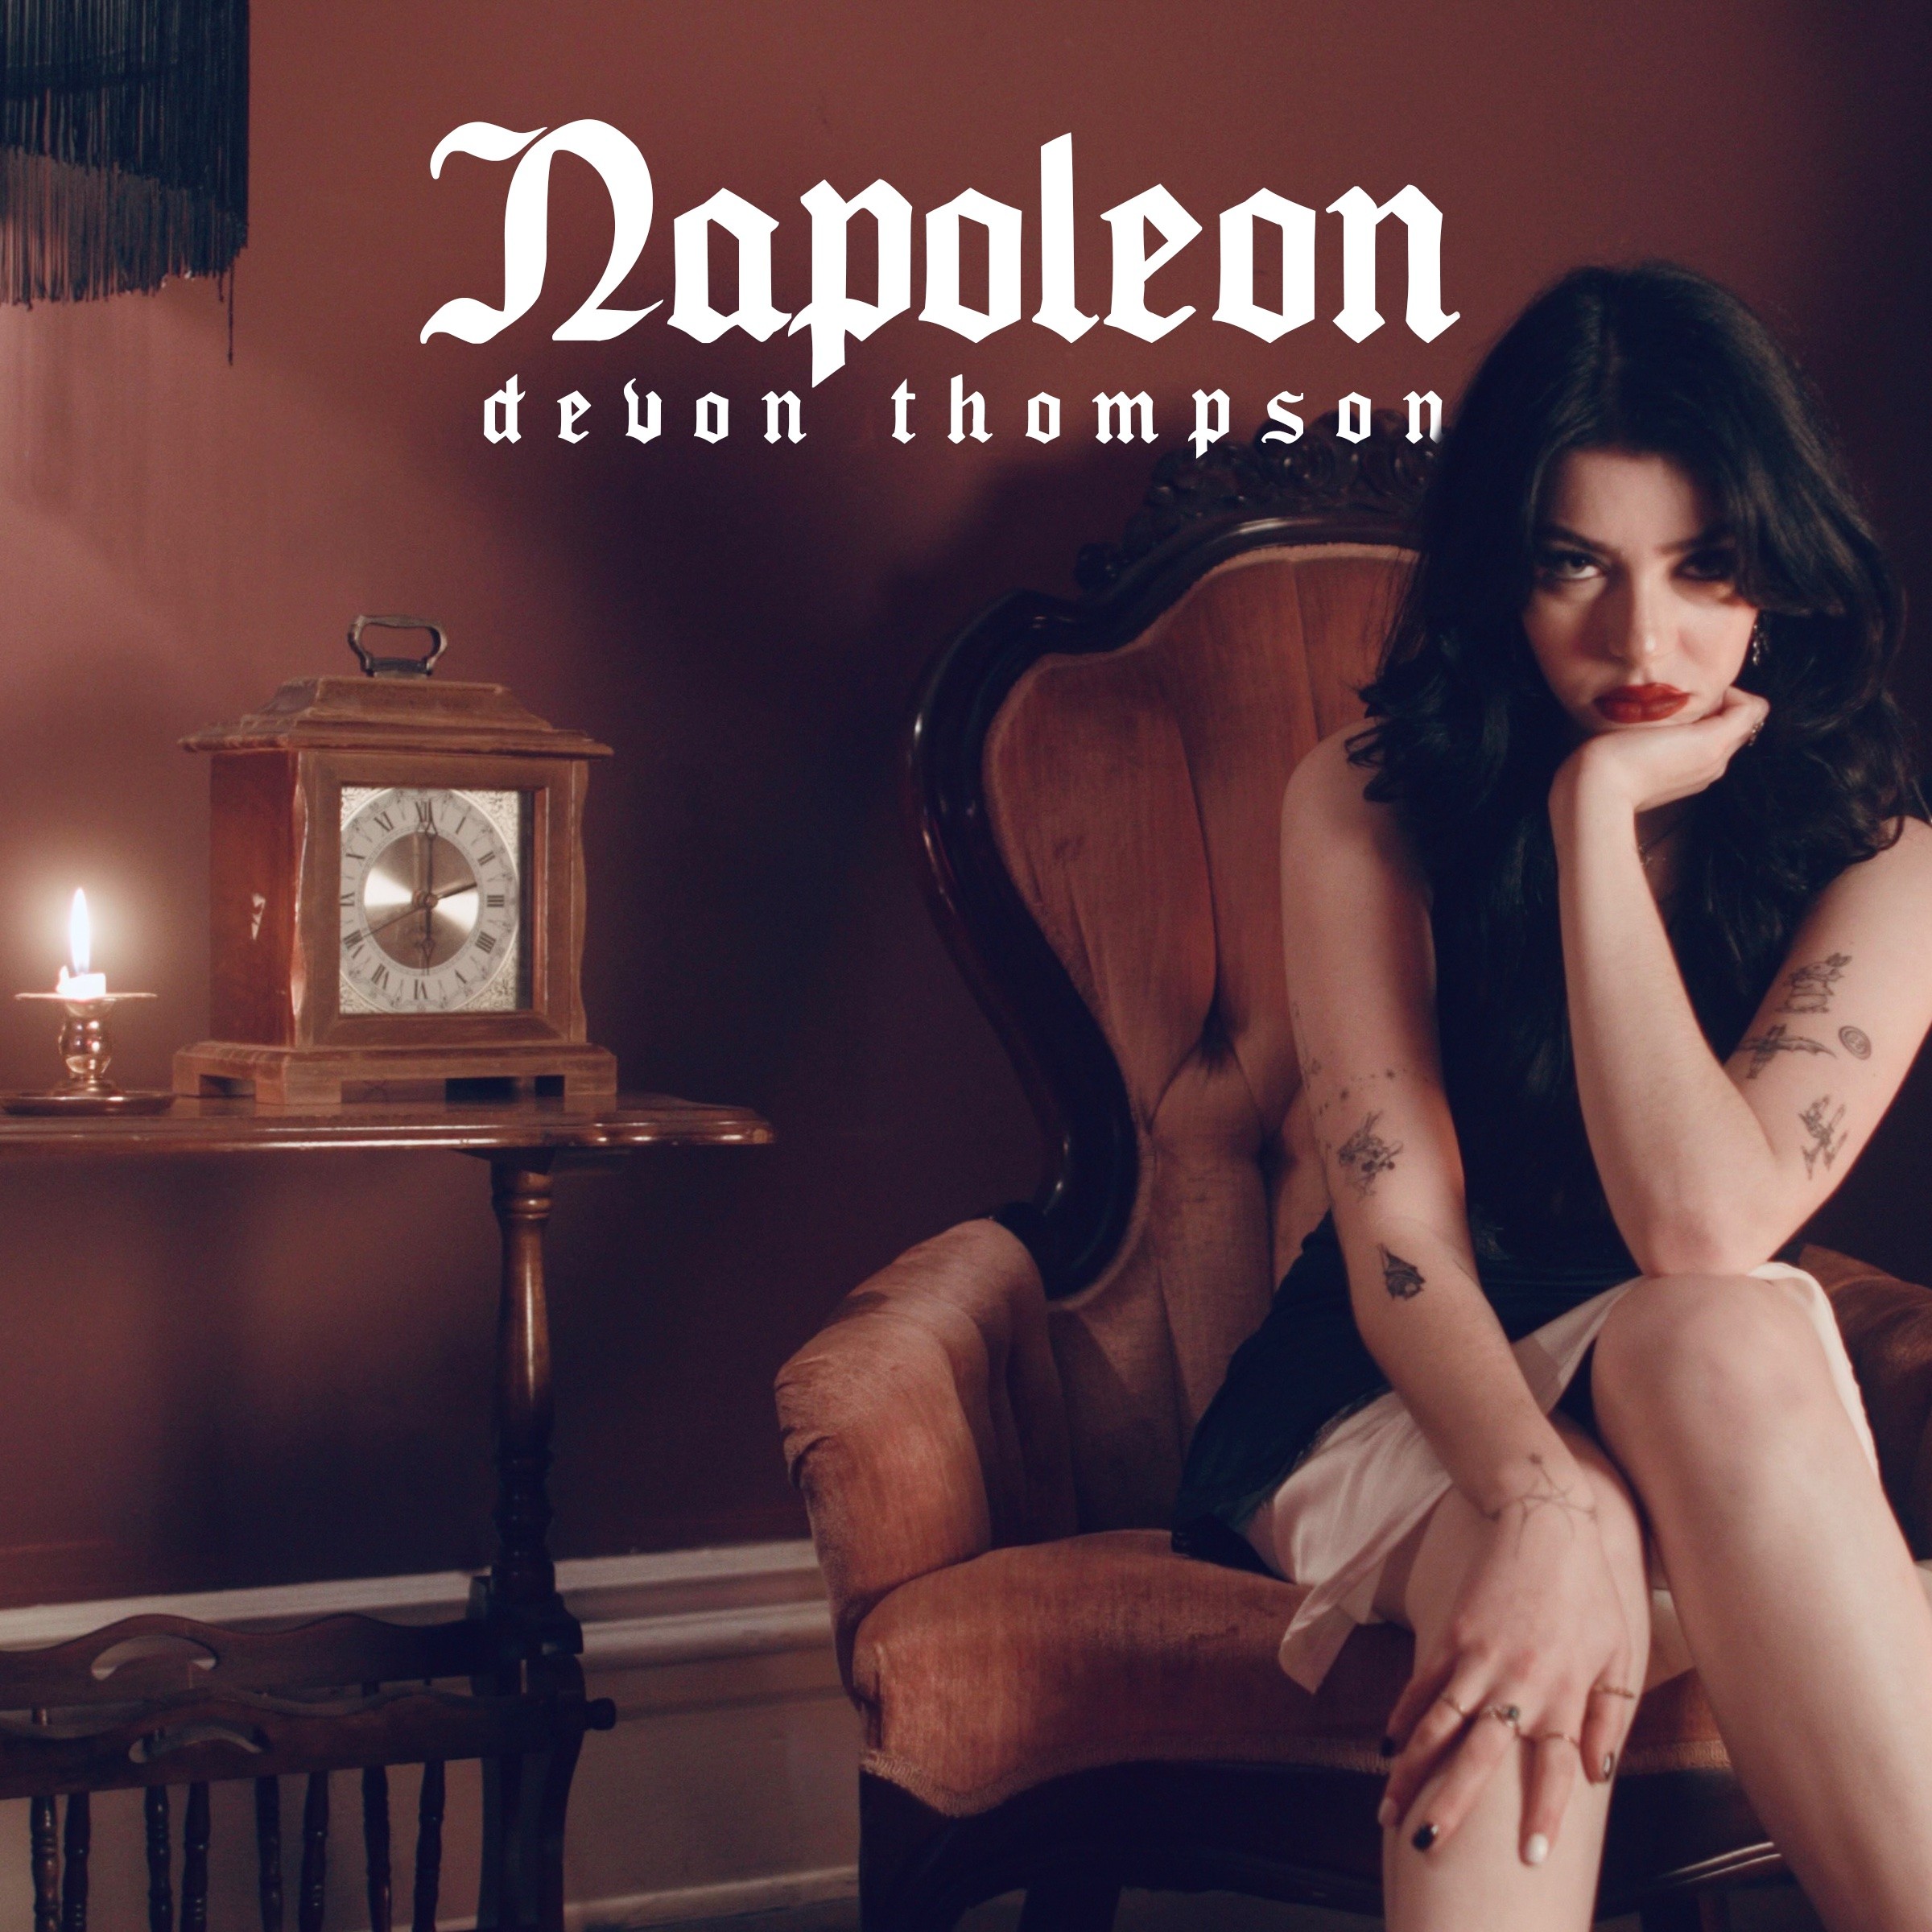 Devon Thompson “Napoleon” single artwork